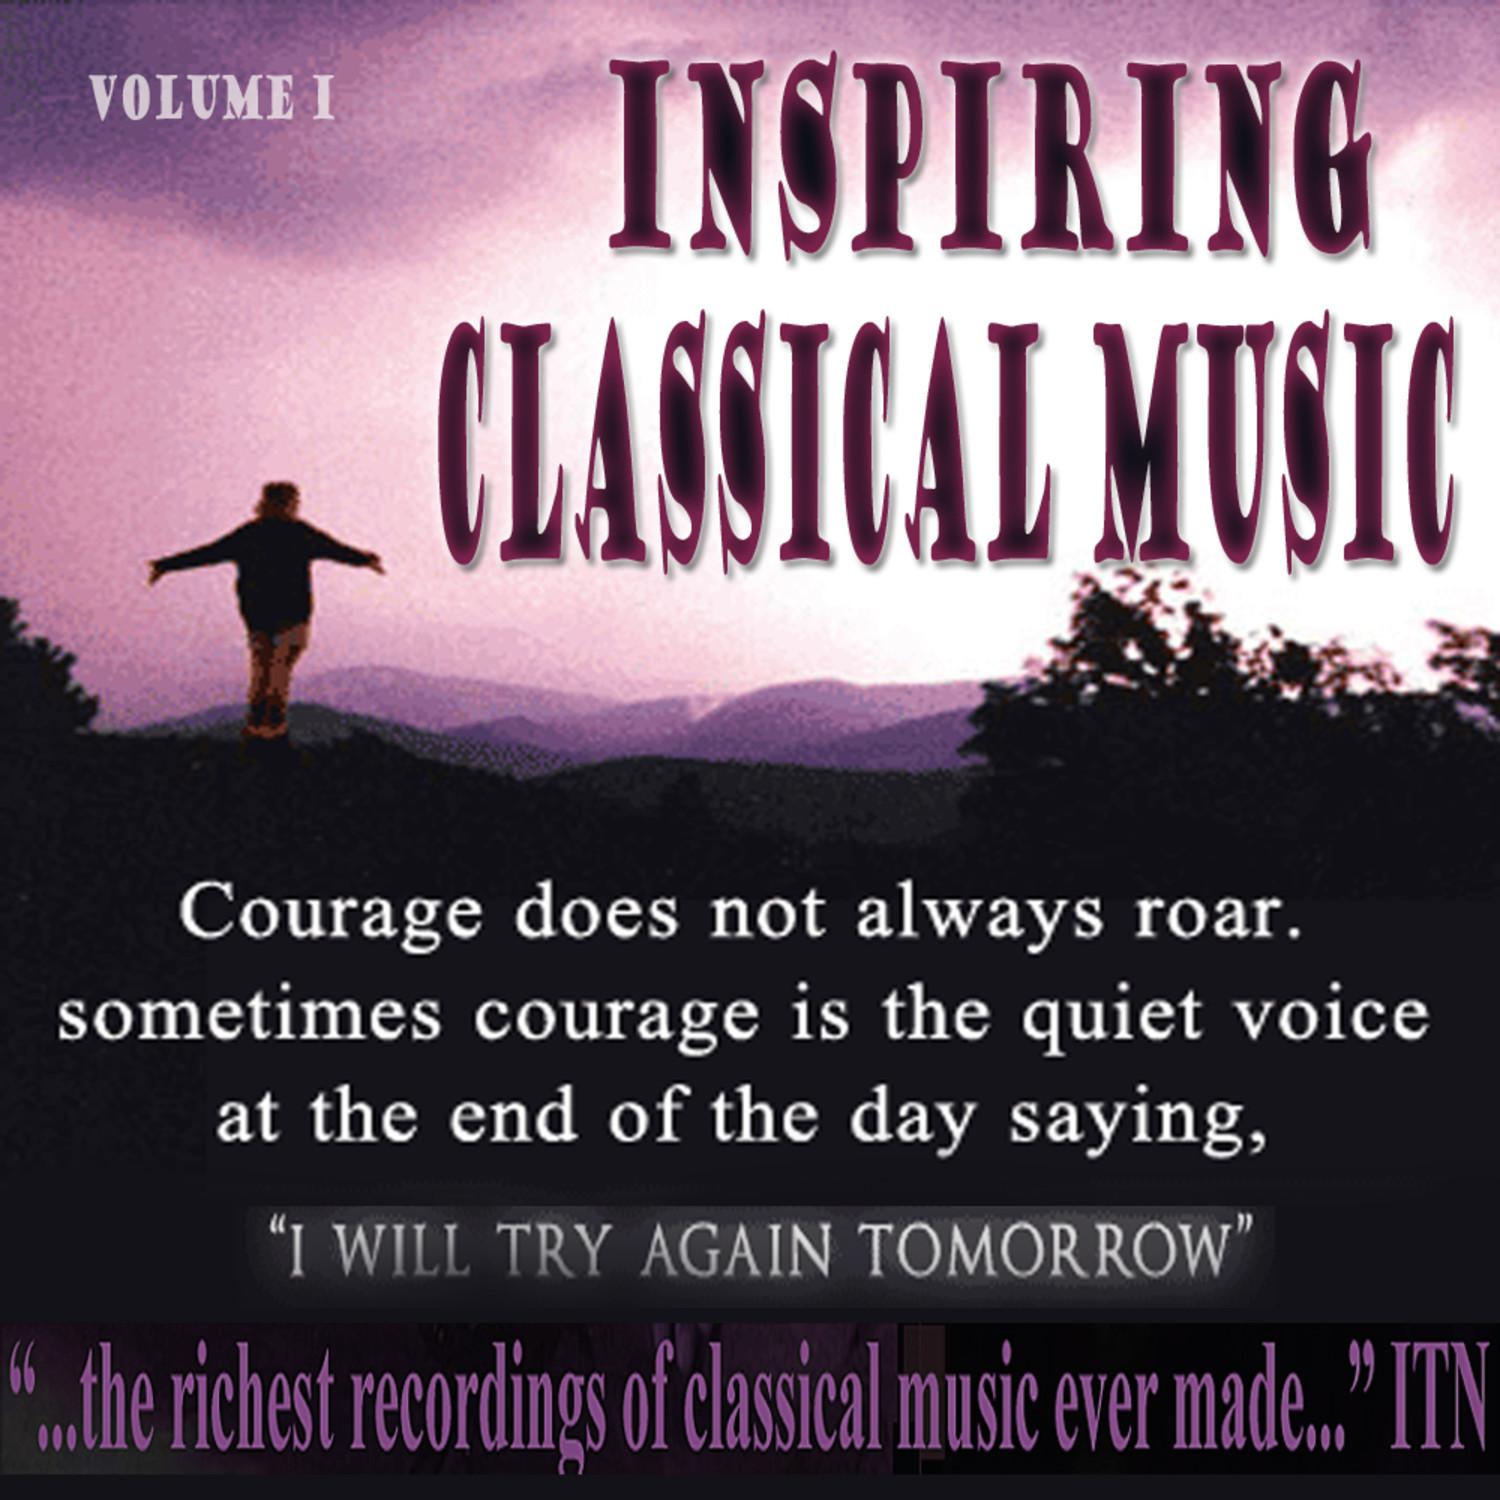 Inspiring Classical Music Volume 1